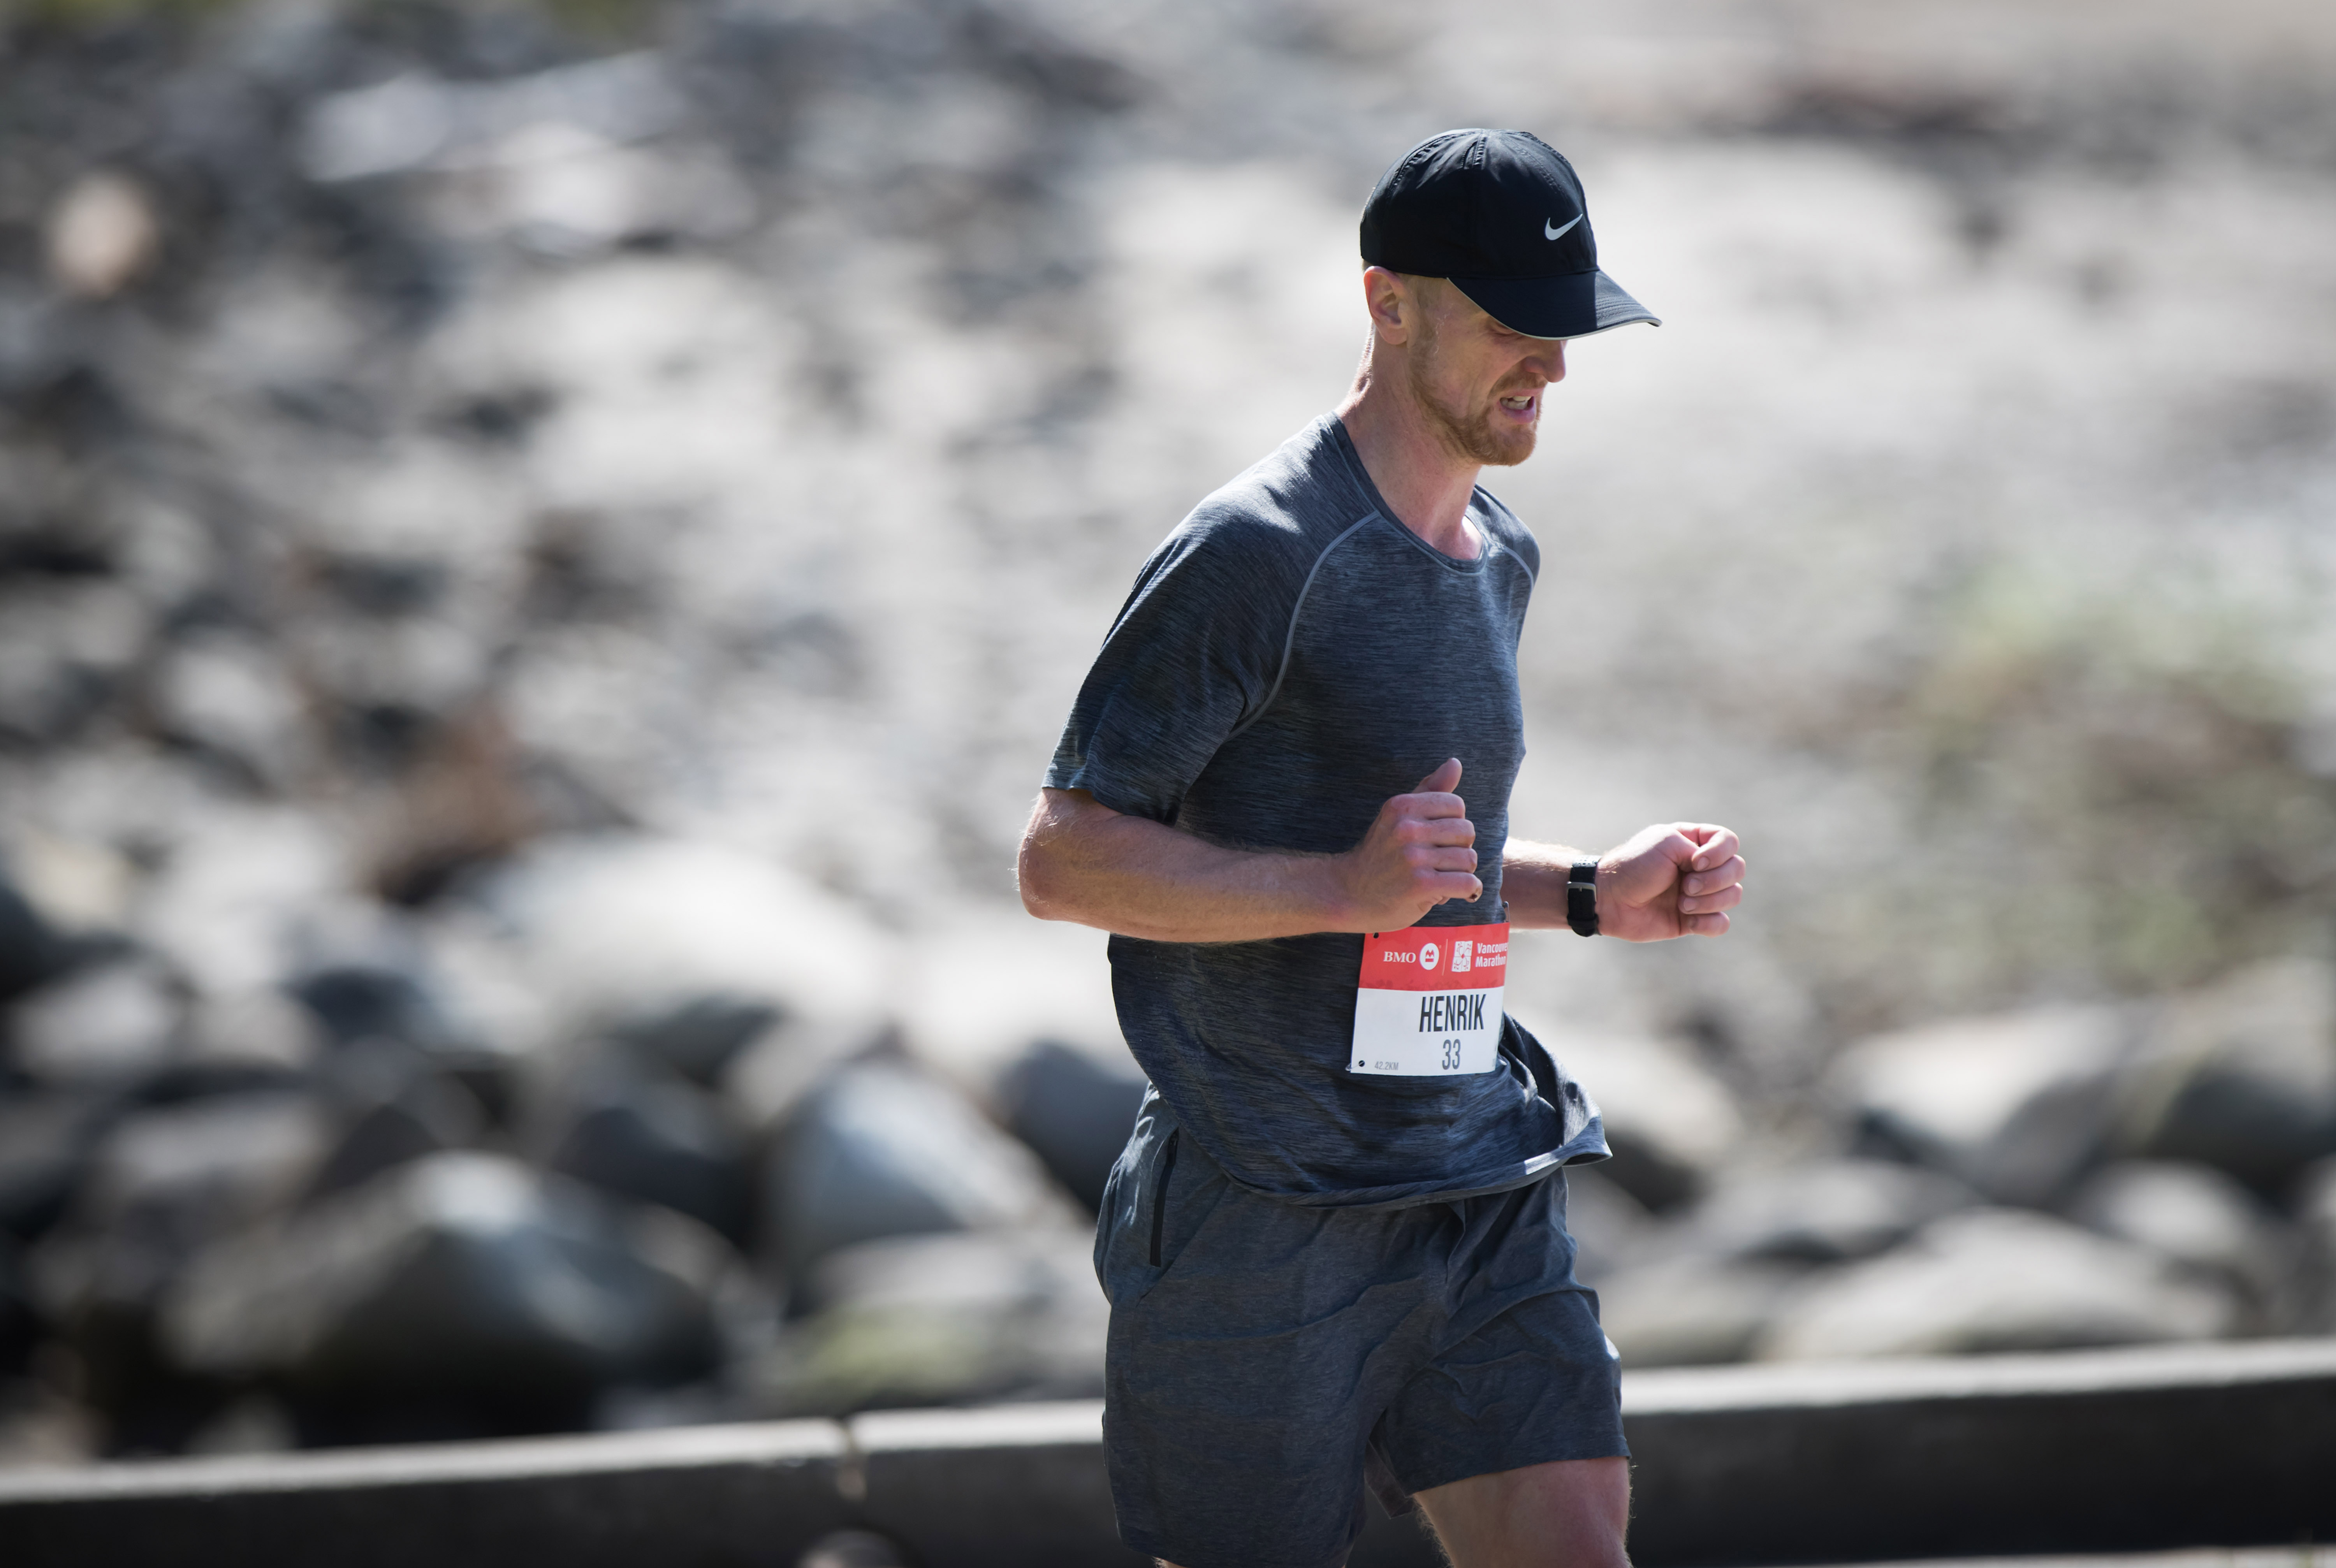 Henrik Sedin finishes strong in the last KMs of the BMO Vancouver Marathon. Photo: Darryl Dyck / RUNVAN®